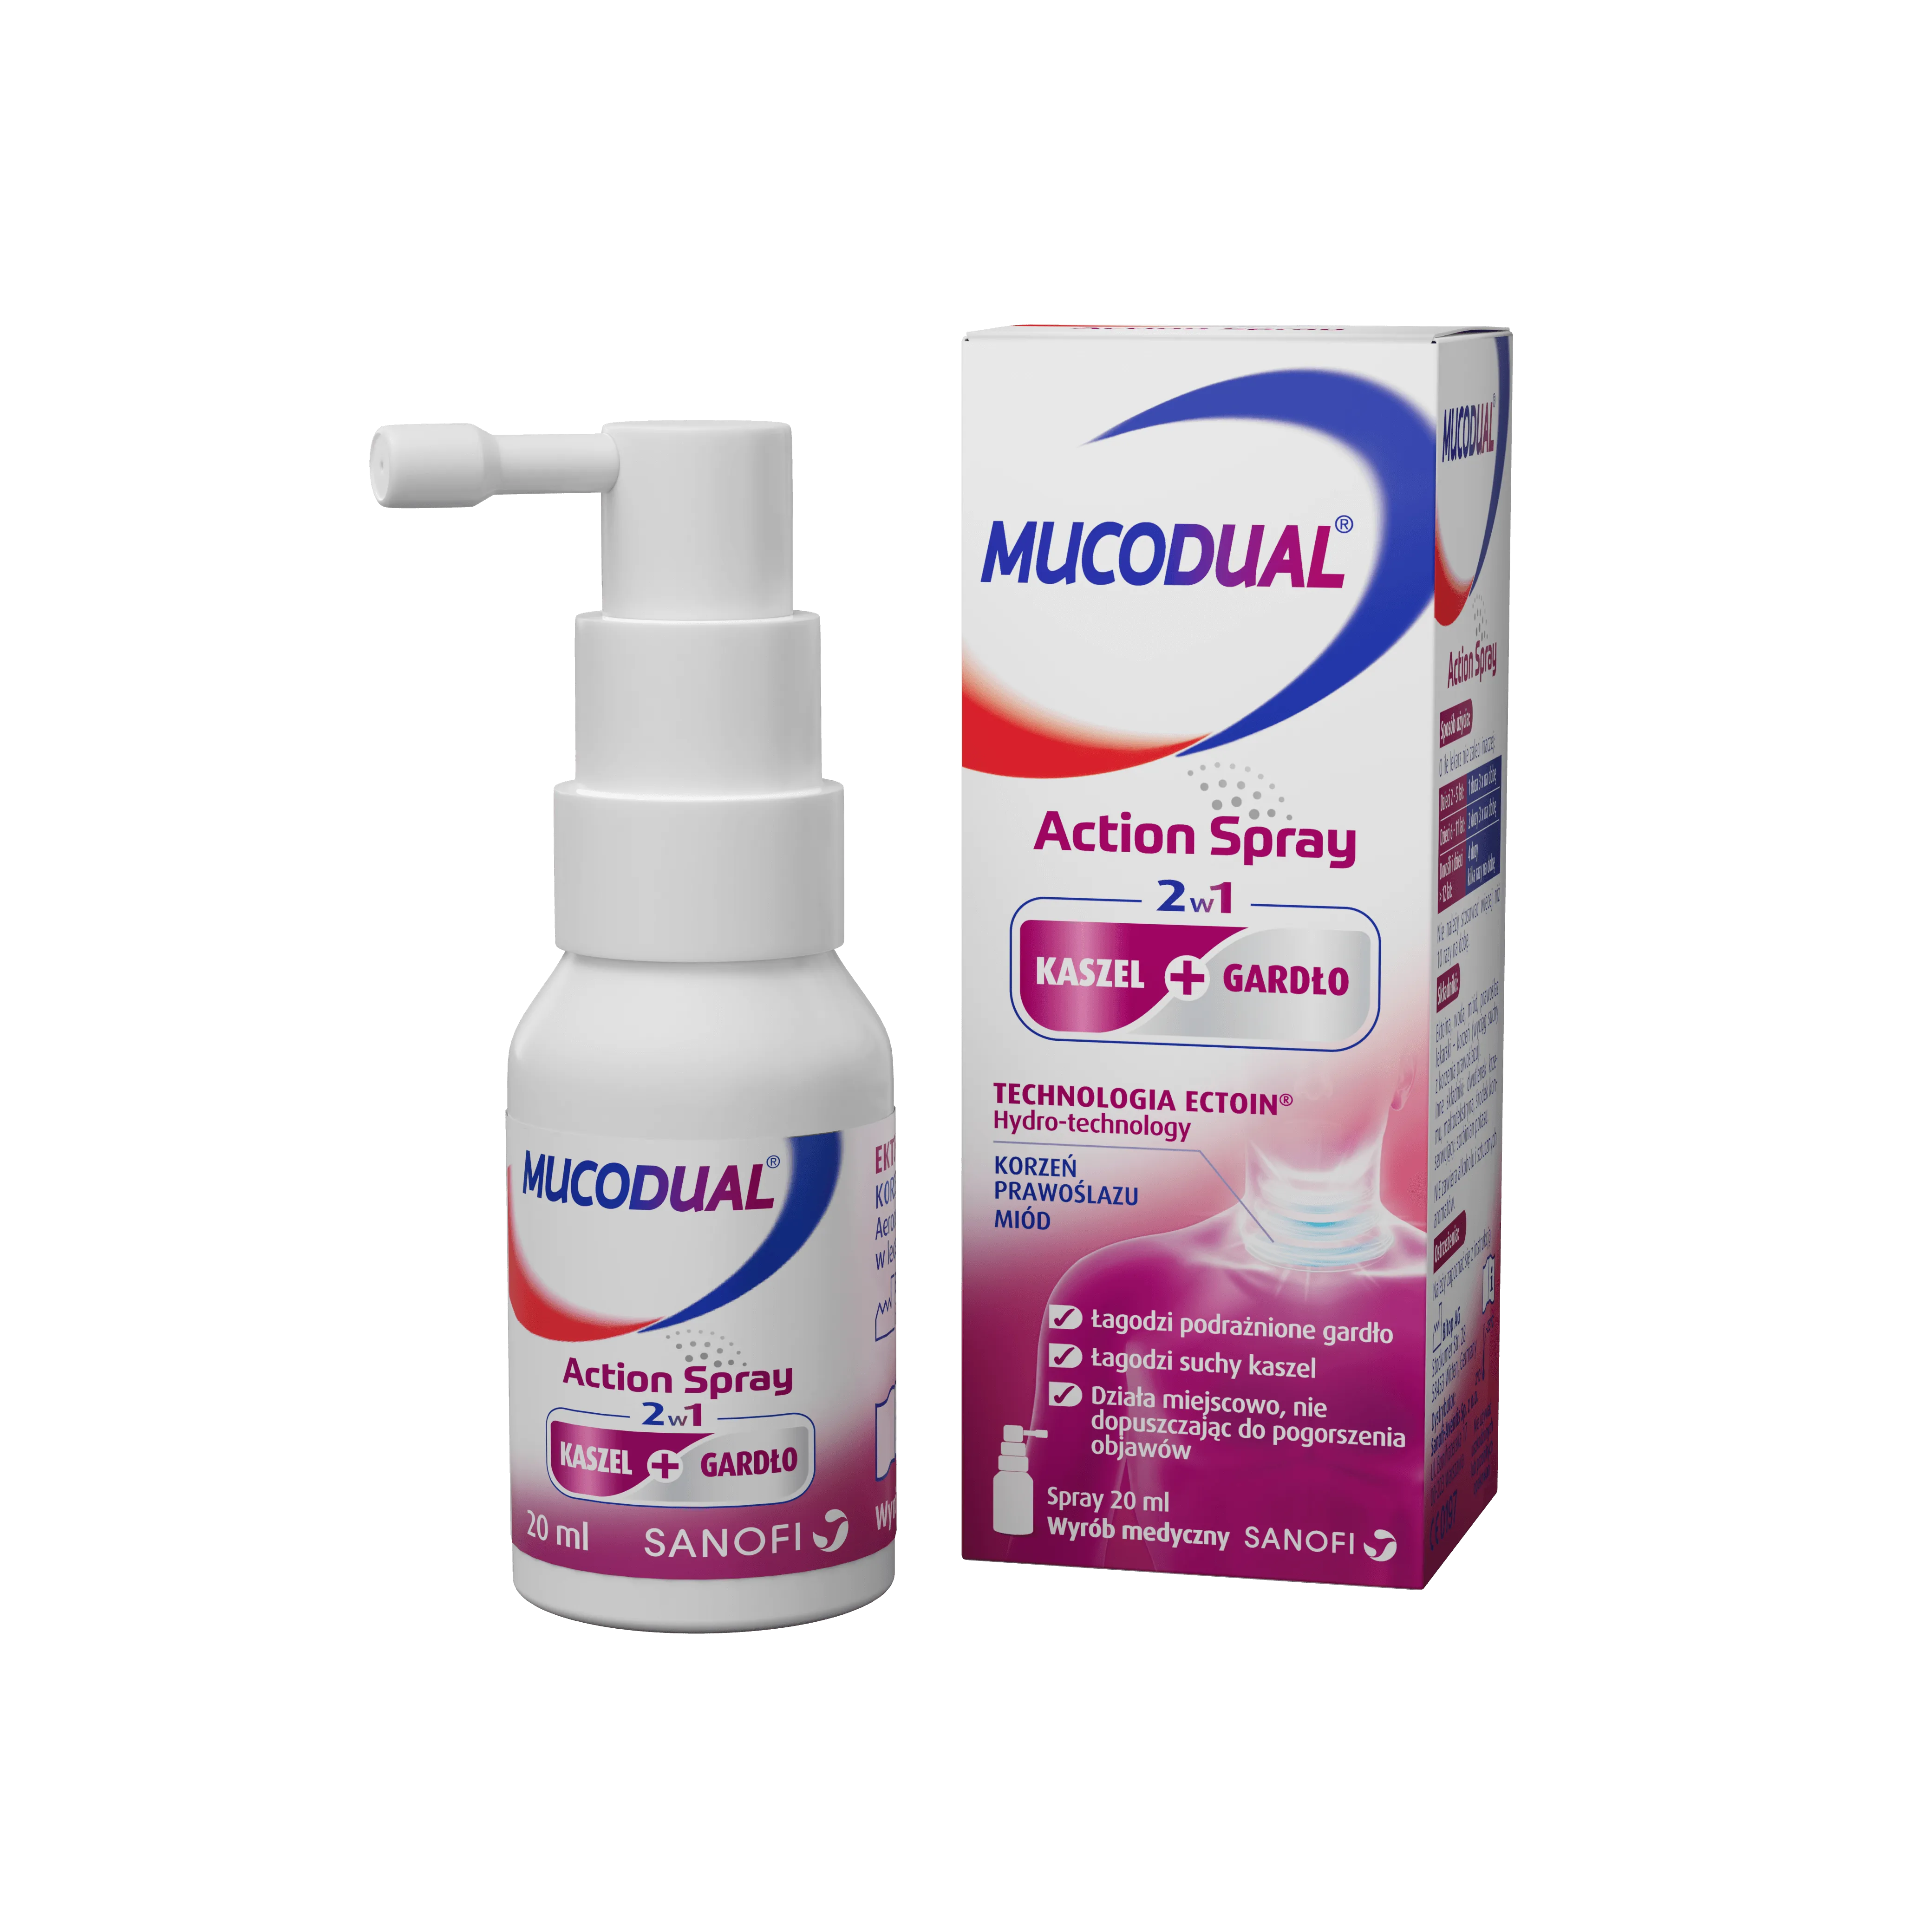 Mucodual Action Spray